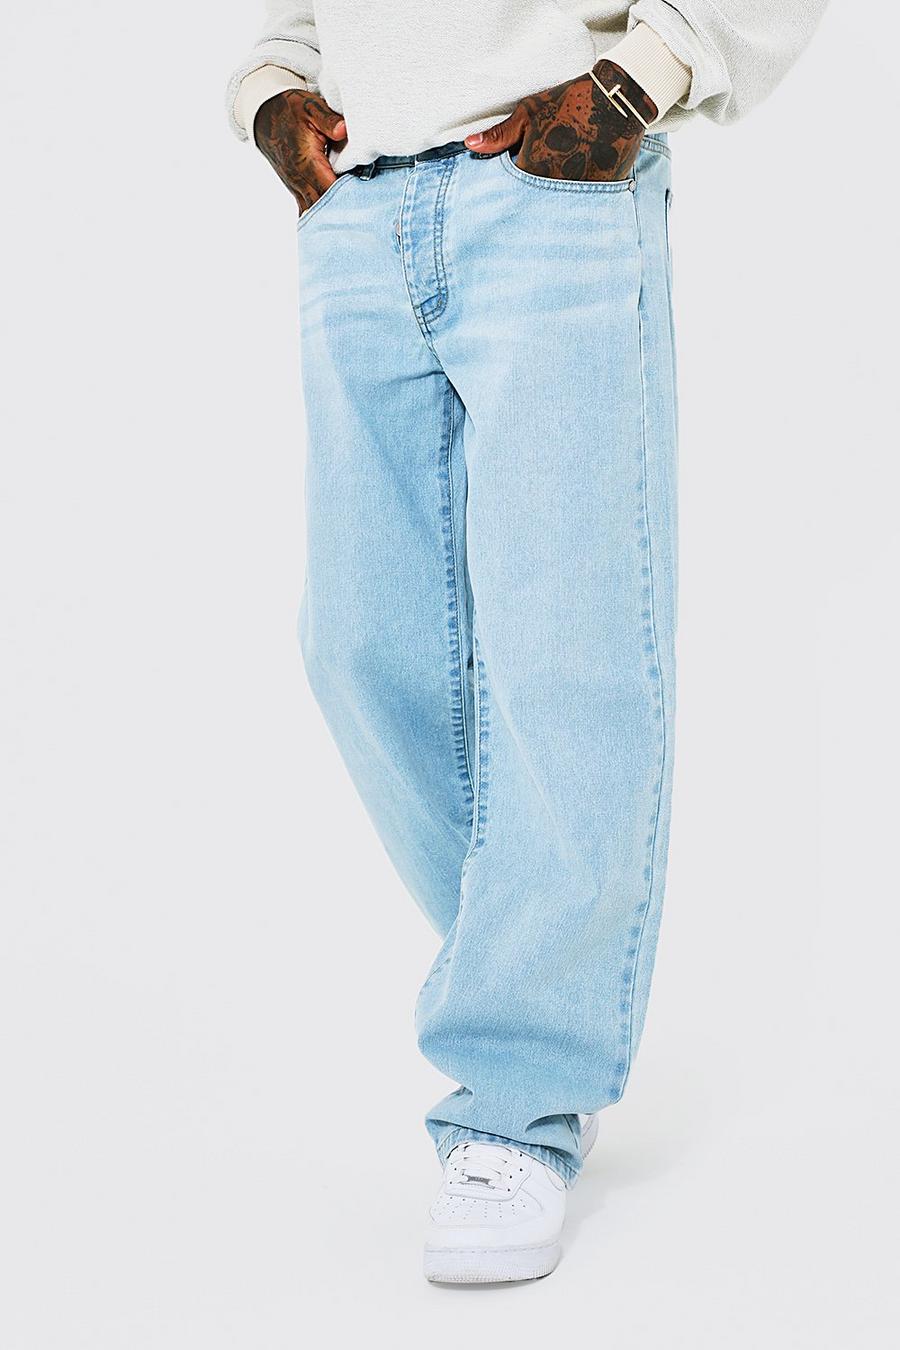 Ice blue מכנסי ג'ינס מבד קשיח בגזרה רפויה